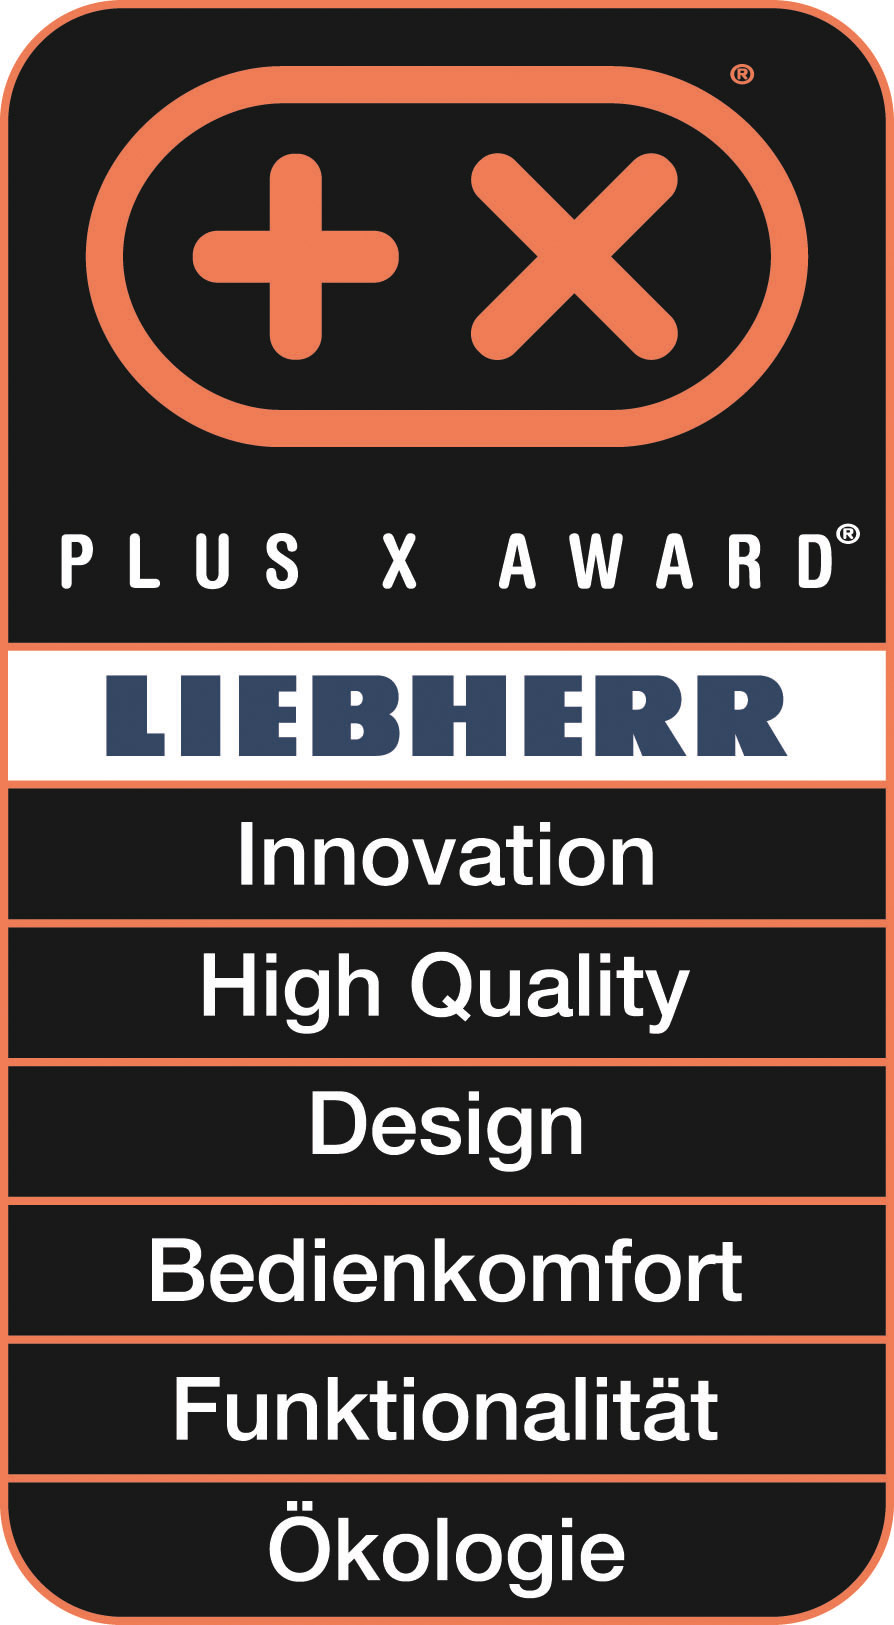 Plus X Award 2016 - Liebherr